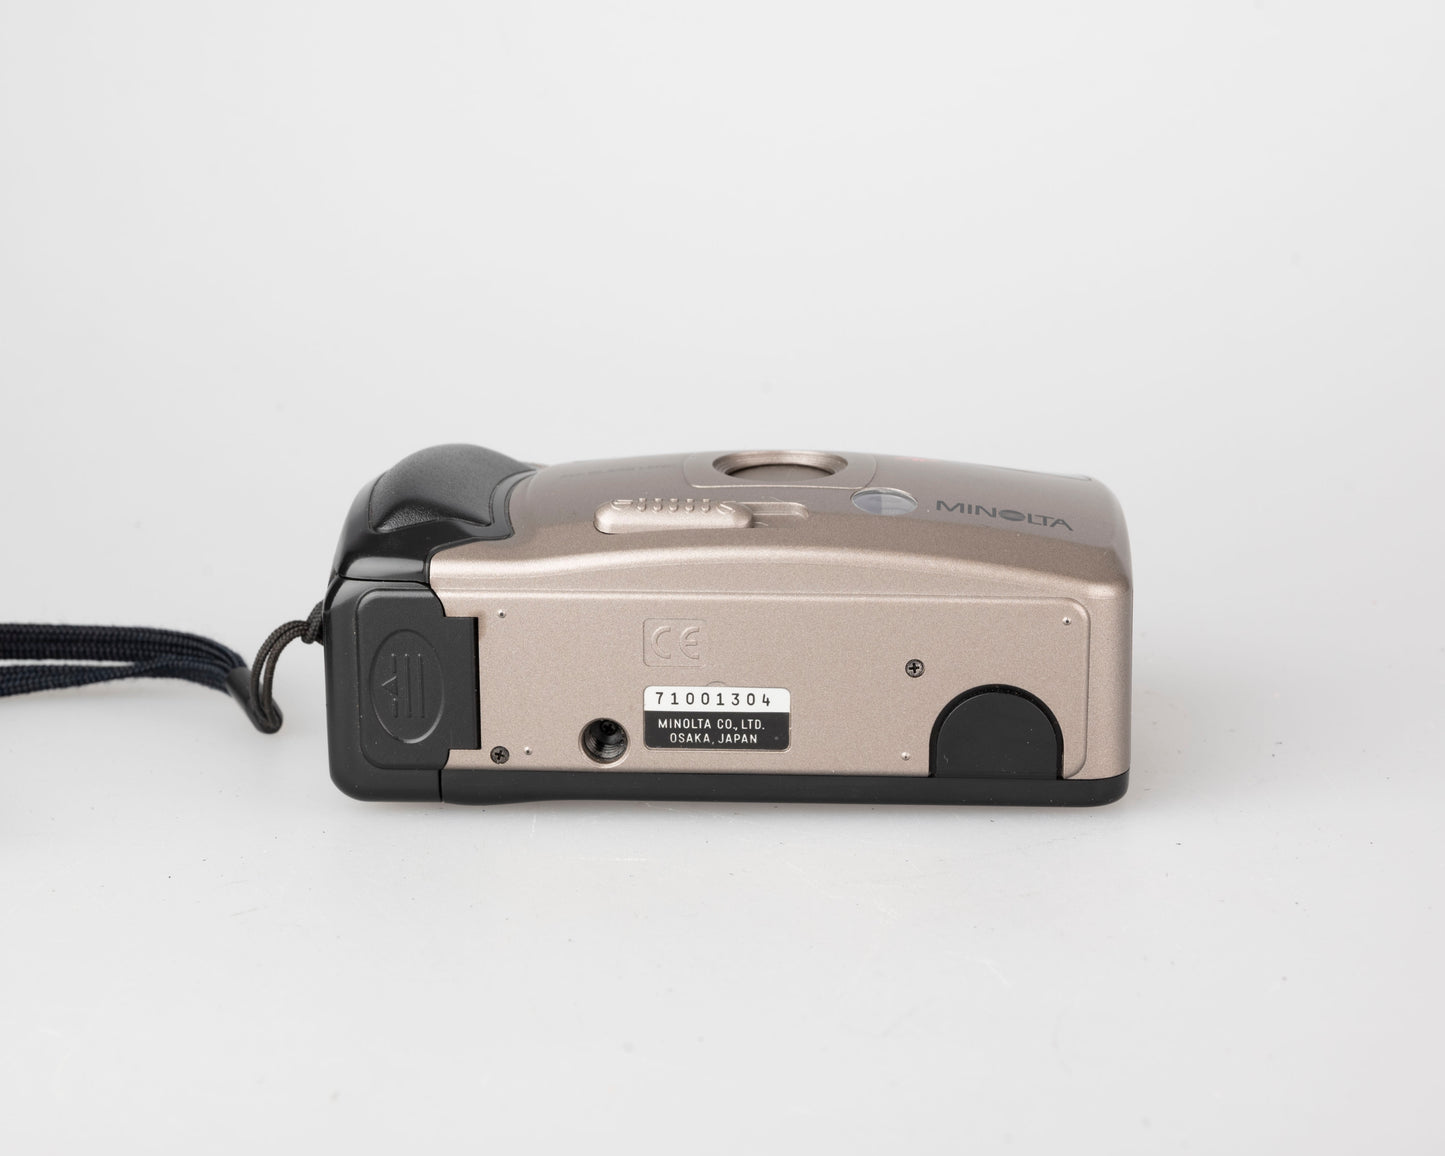 Minolta AF Big Finder 35mm camera w/ case + manual (serial 71001304)